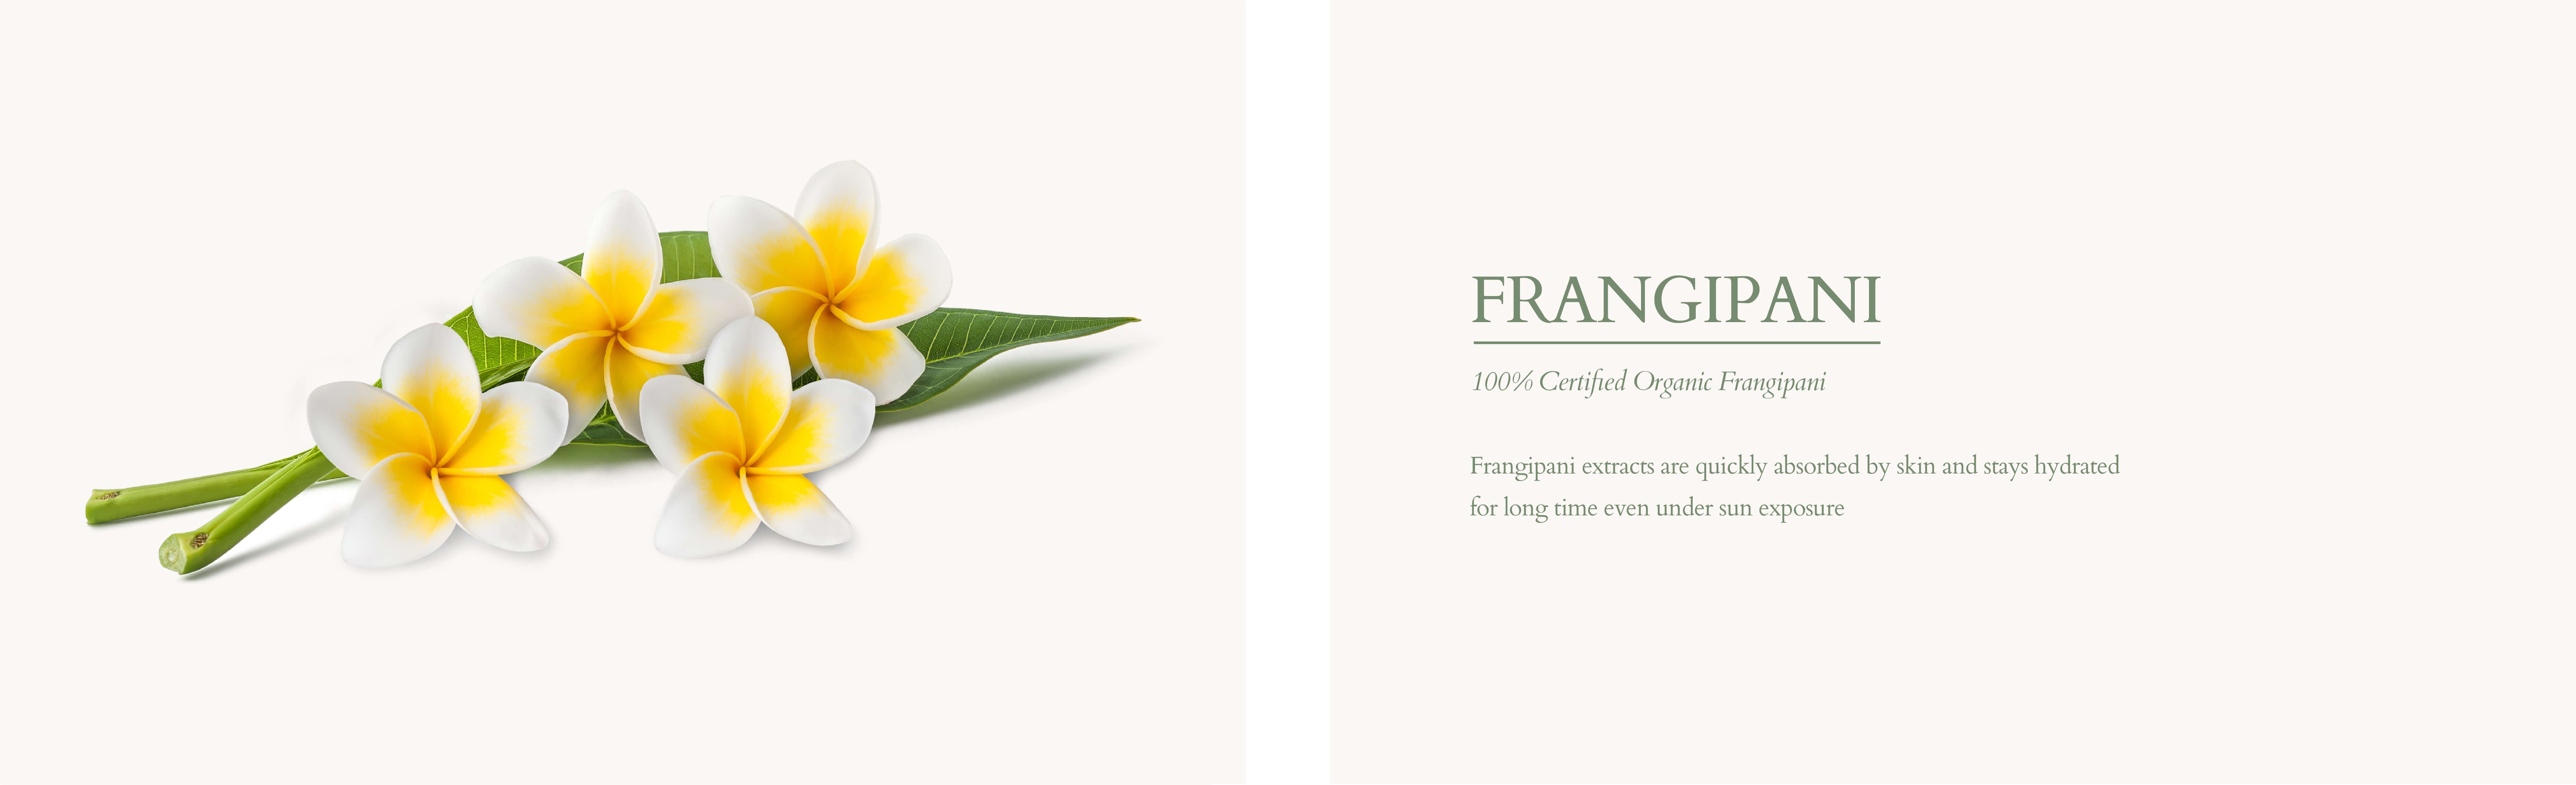 Organic frangipani for skin 4b39c9cf 53d0 4349 a8df 0fb95280d8f2